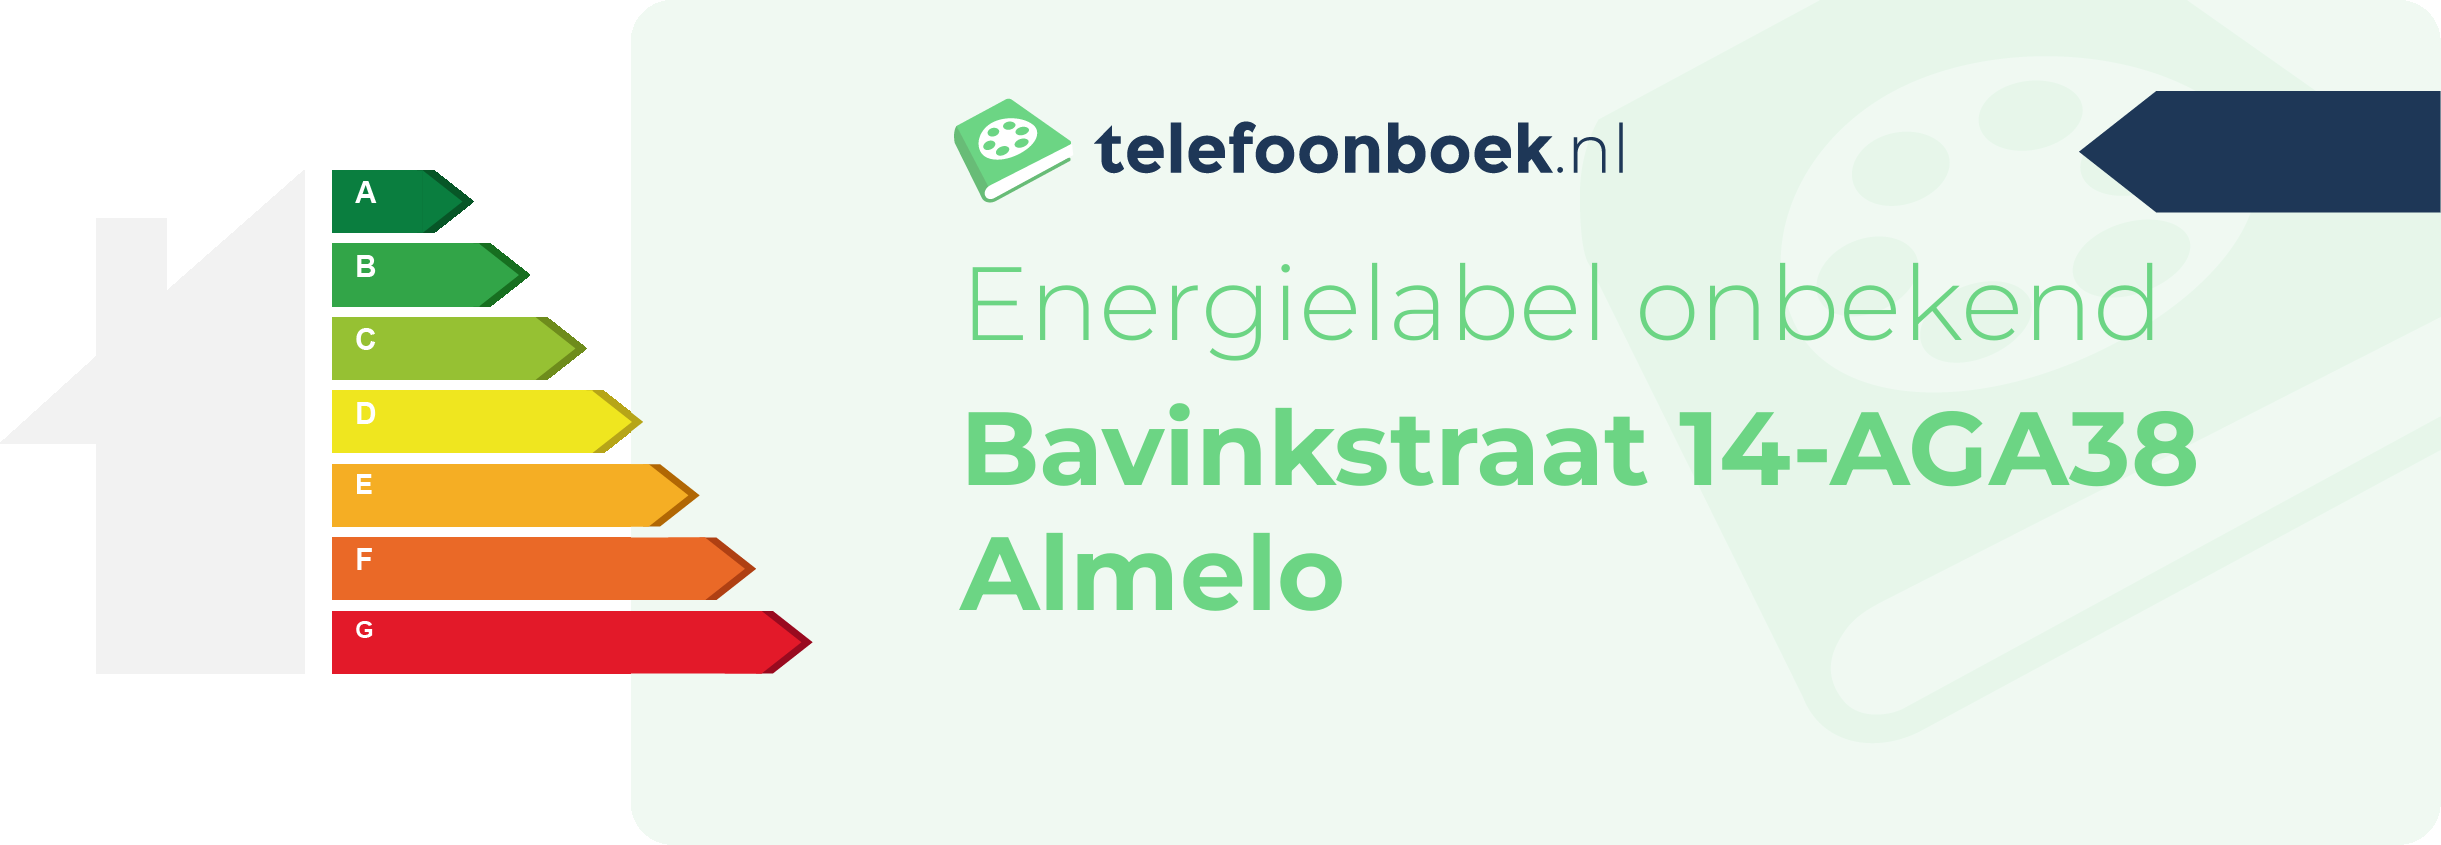 Energielabel Bavinkstraat 14-AGA38 Almelo